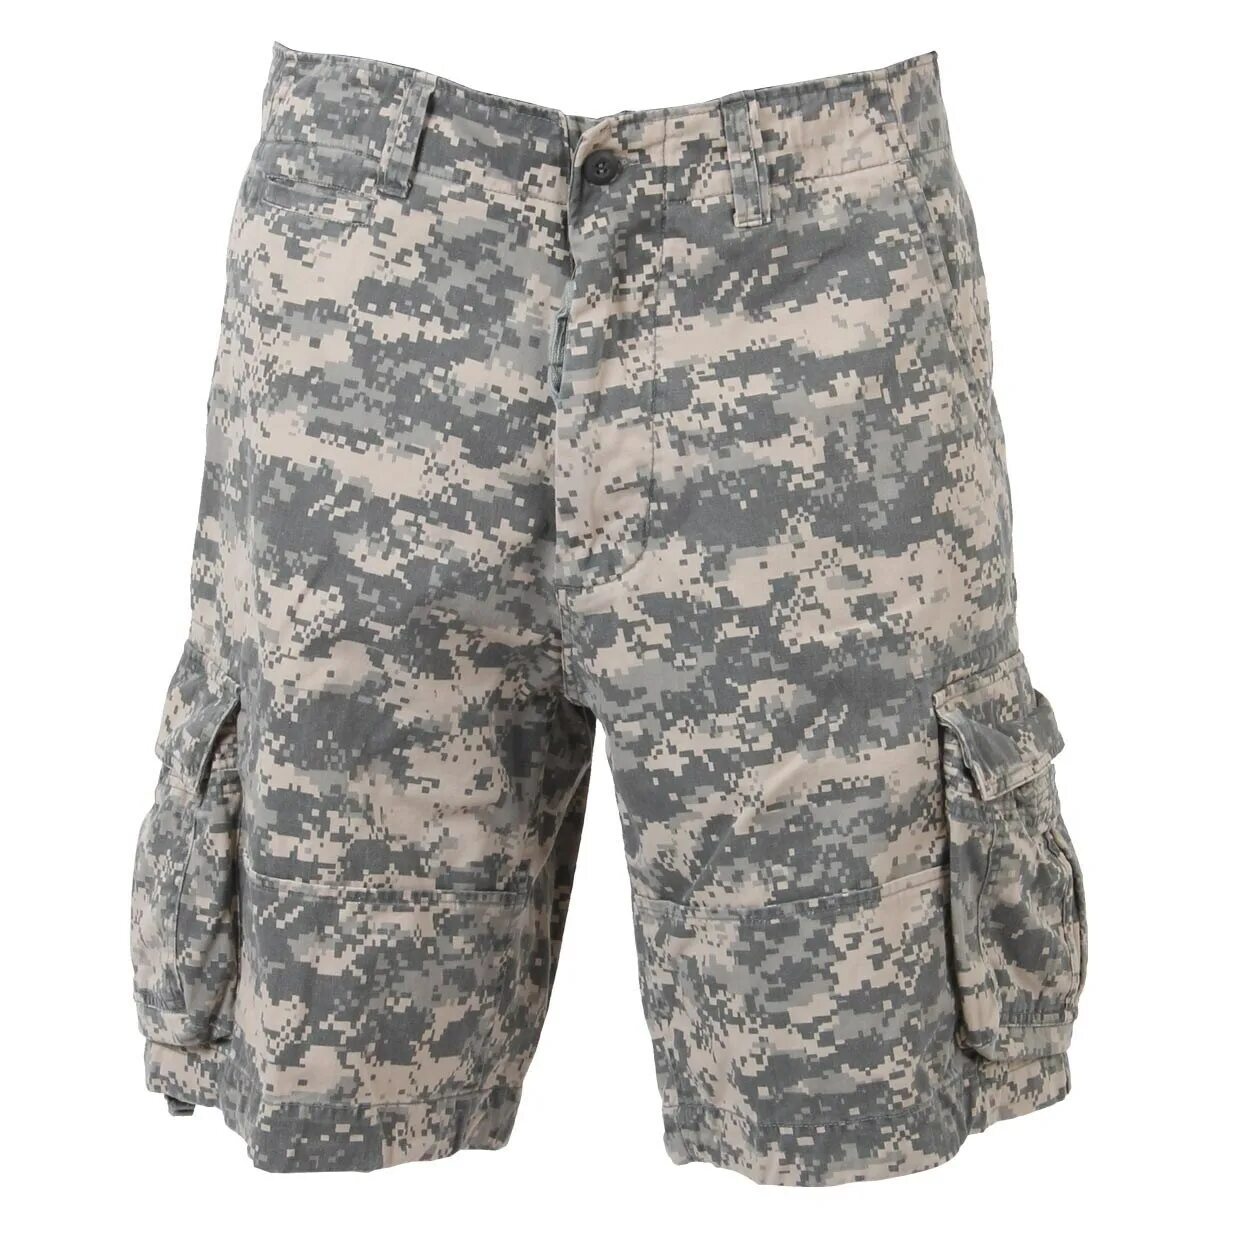 Военные шорты. Rothco шорты Vintage. Army Red Digital Camouflage шорты. Шорты Винтаж милитари. Камуфляжные шорты карго.